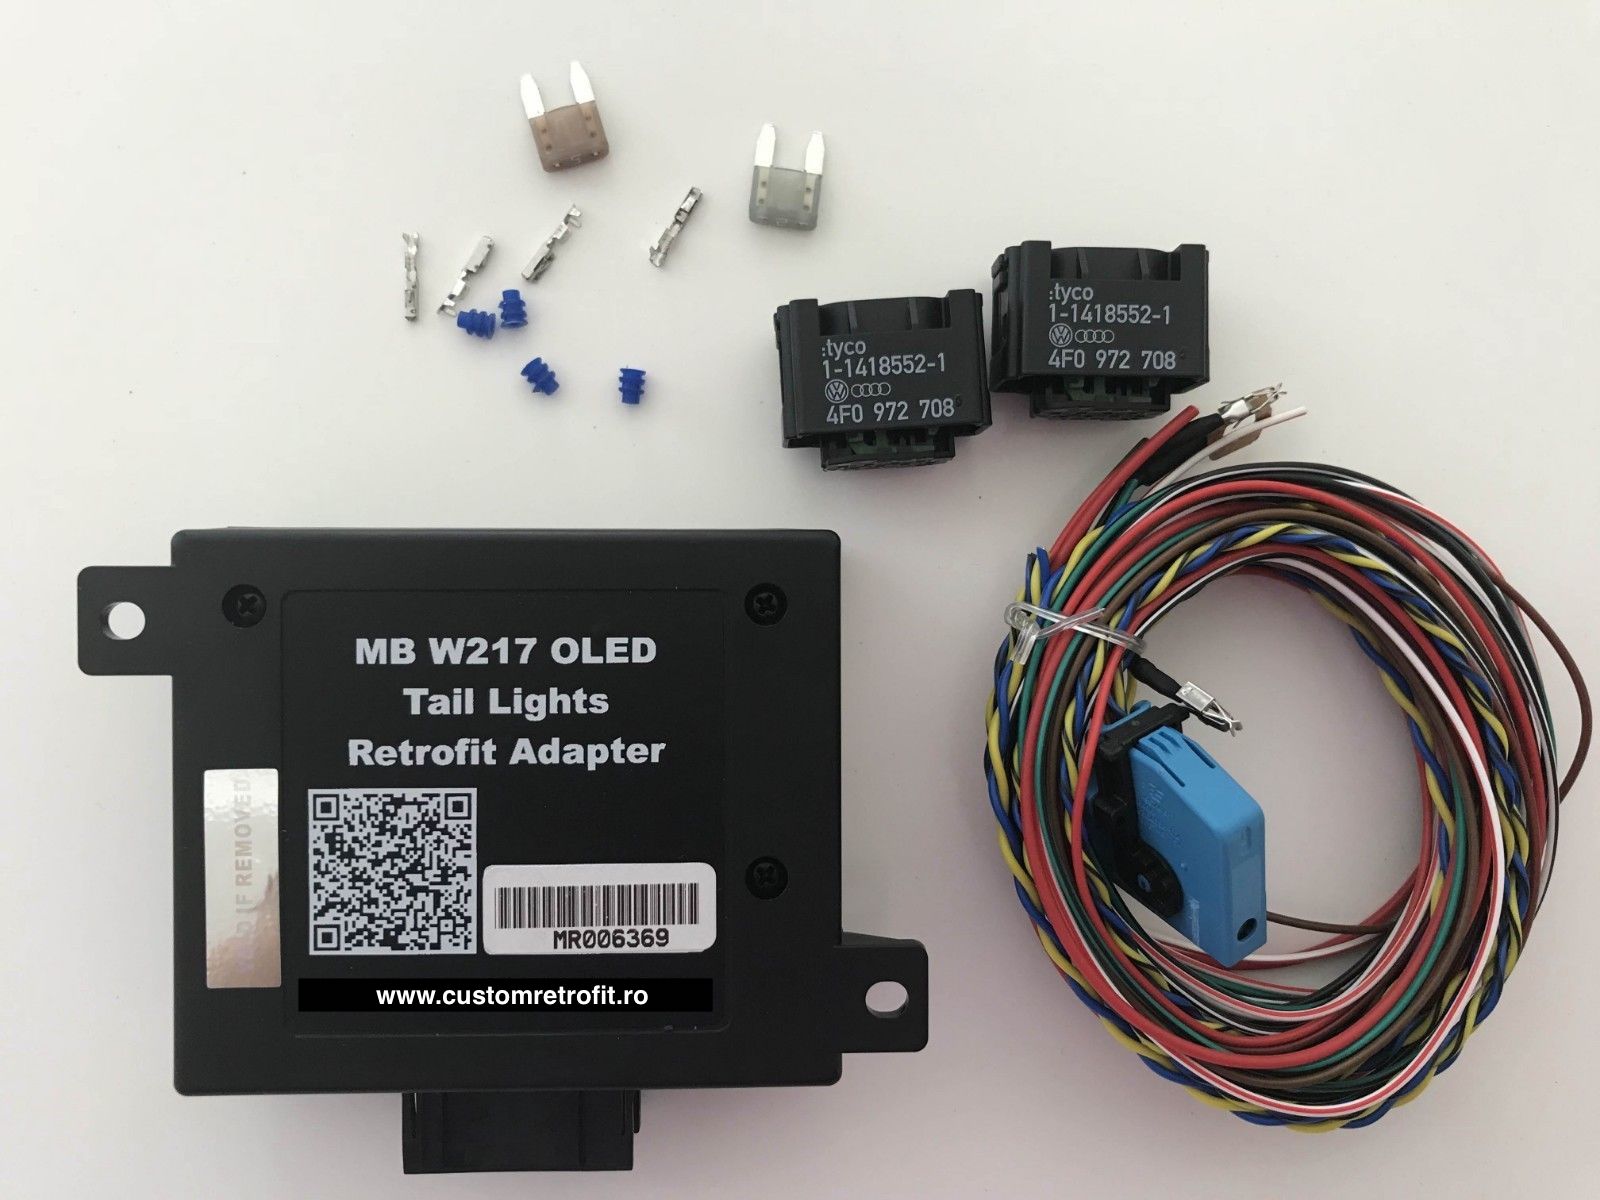 MB W217 OLED Tail Lights Retrofit Adapter